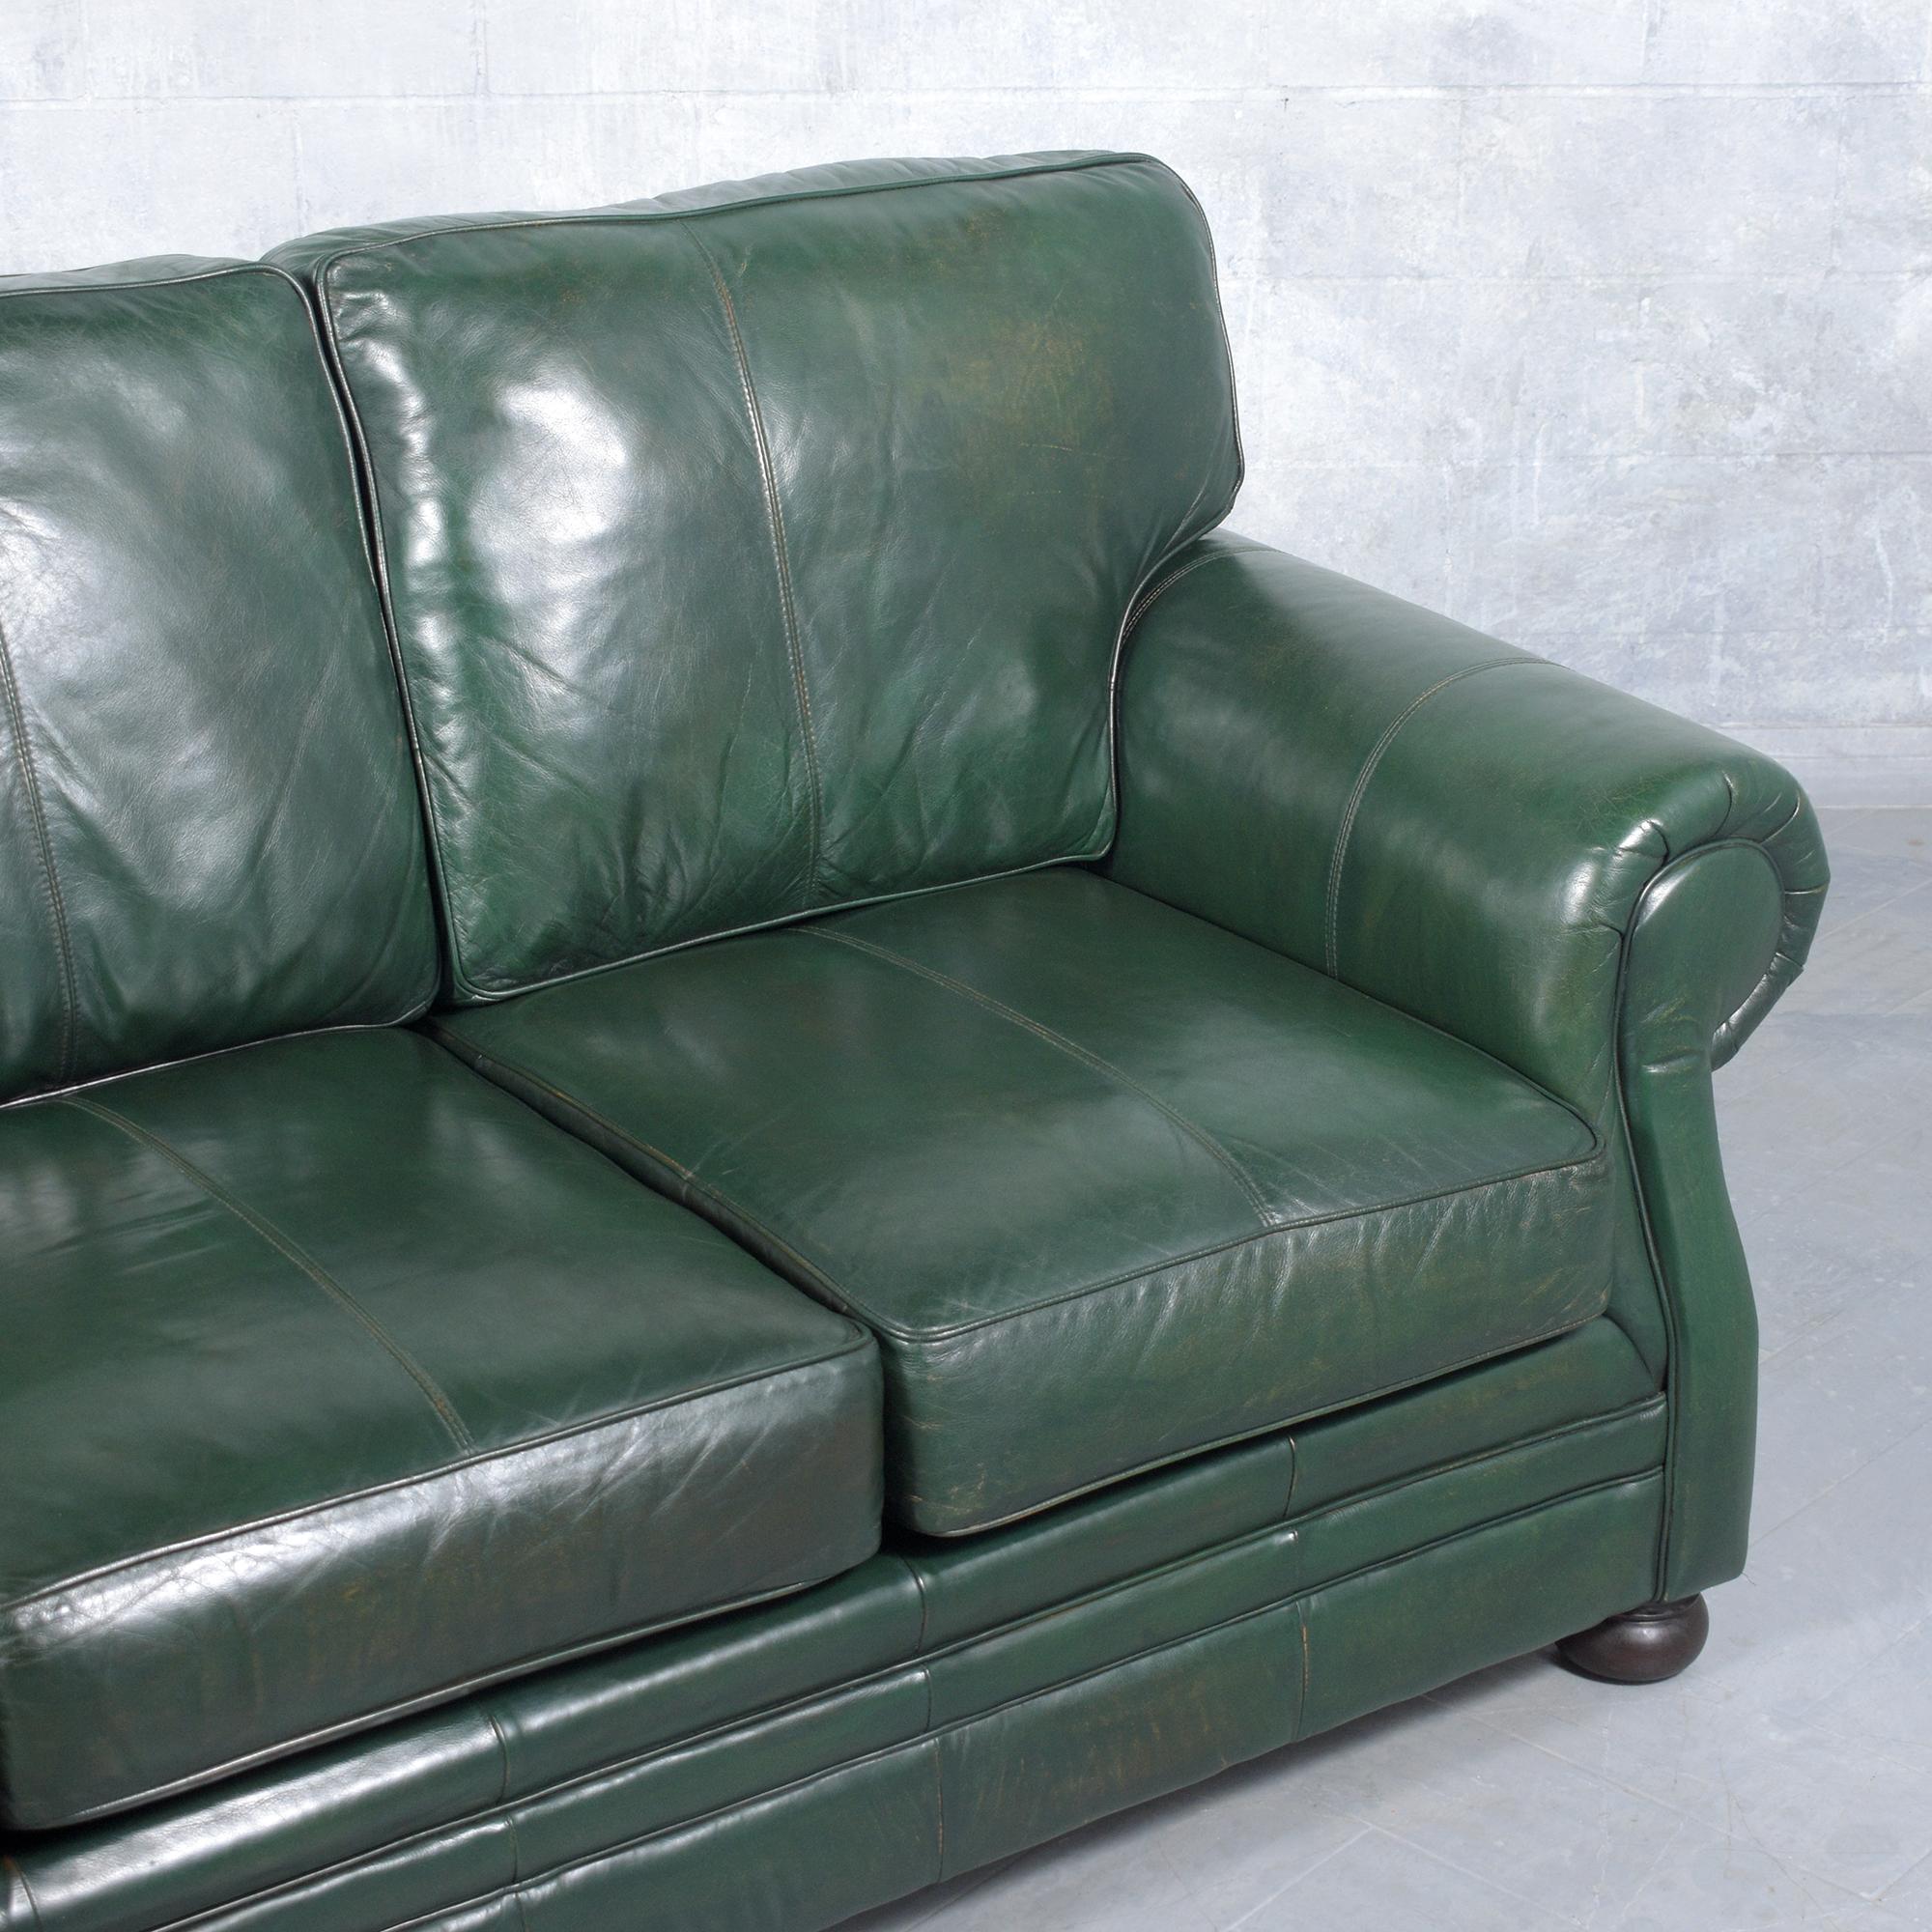 Elegant 1980s Restored Leather Sofa: A Blend of Vintage and Modern For Sale 1